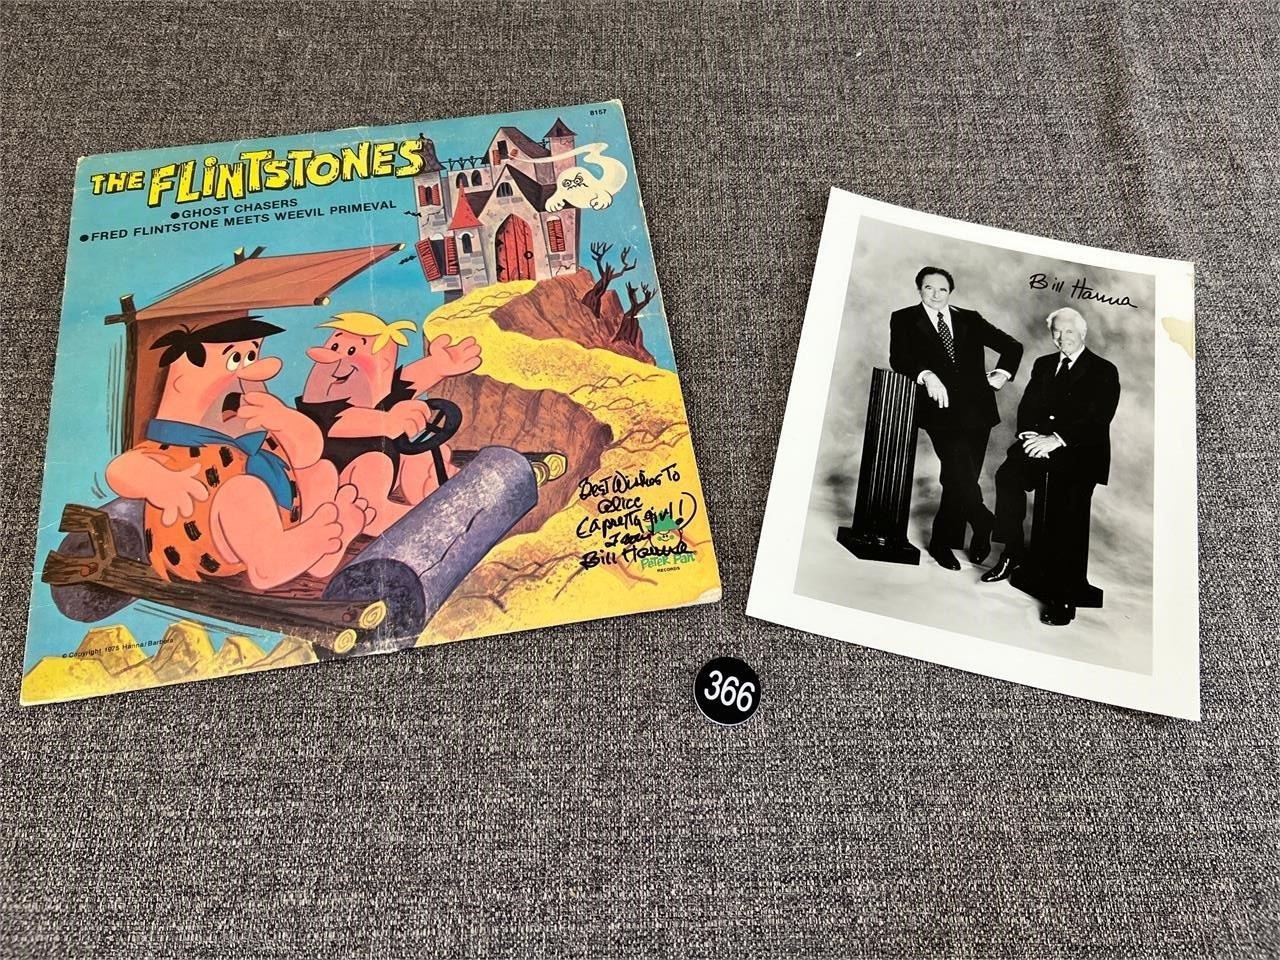 Bill Hanna Signed Flintstones Album & Photo